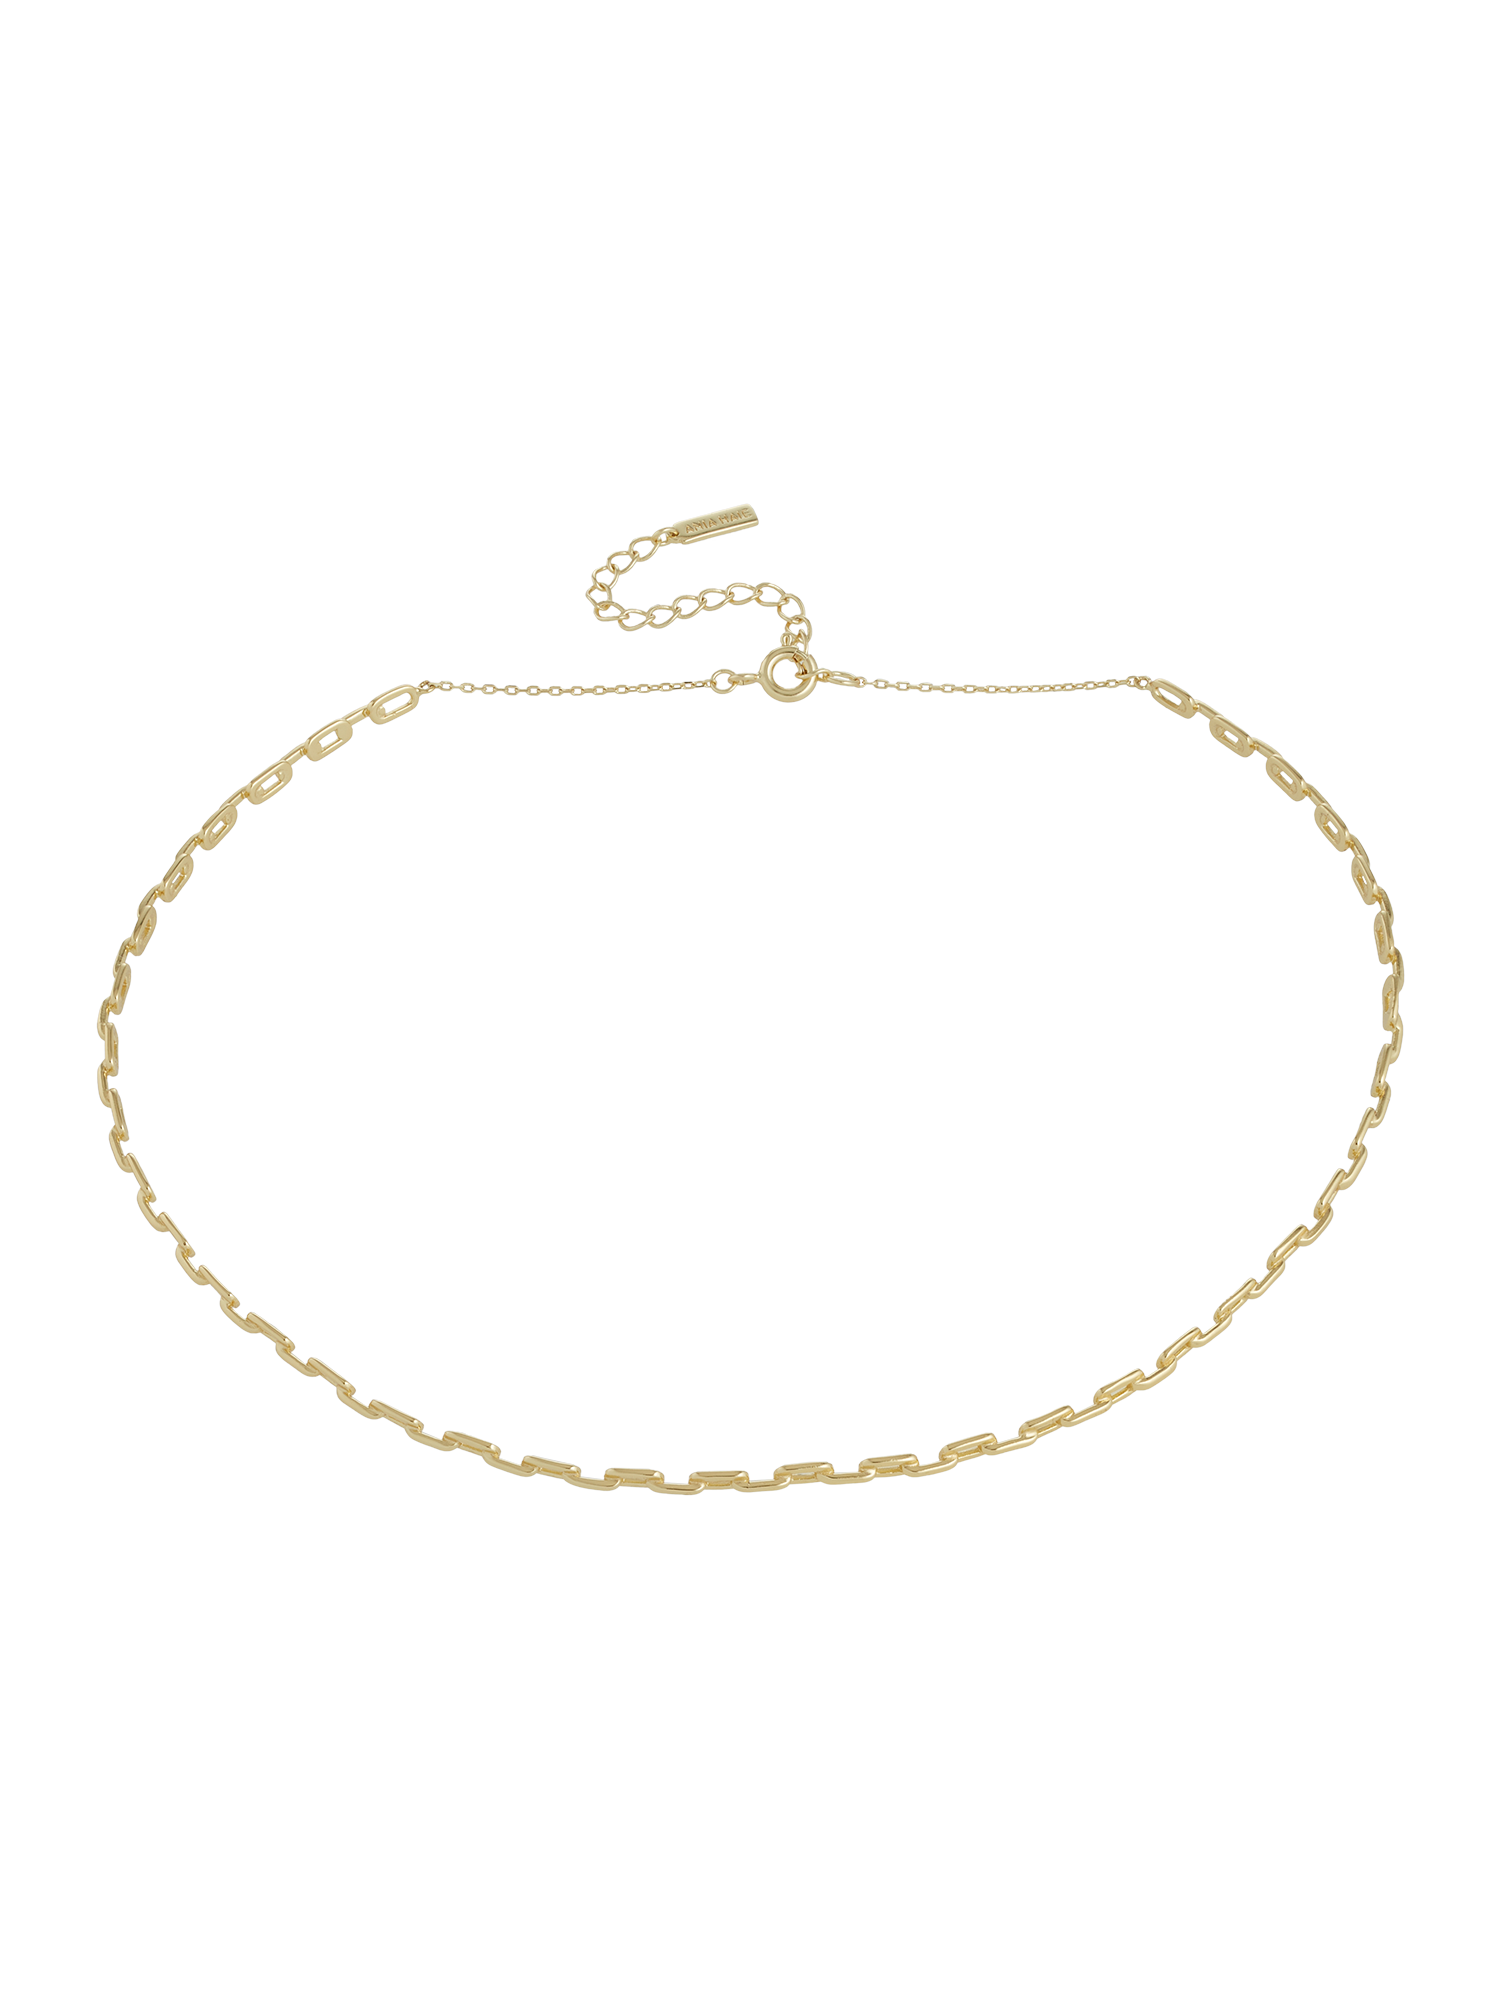 LkA46 Donna ANIA HAIE Collana Chain Solid in Oro 